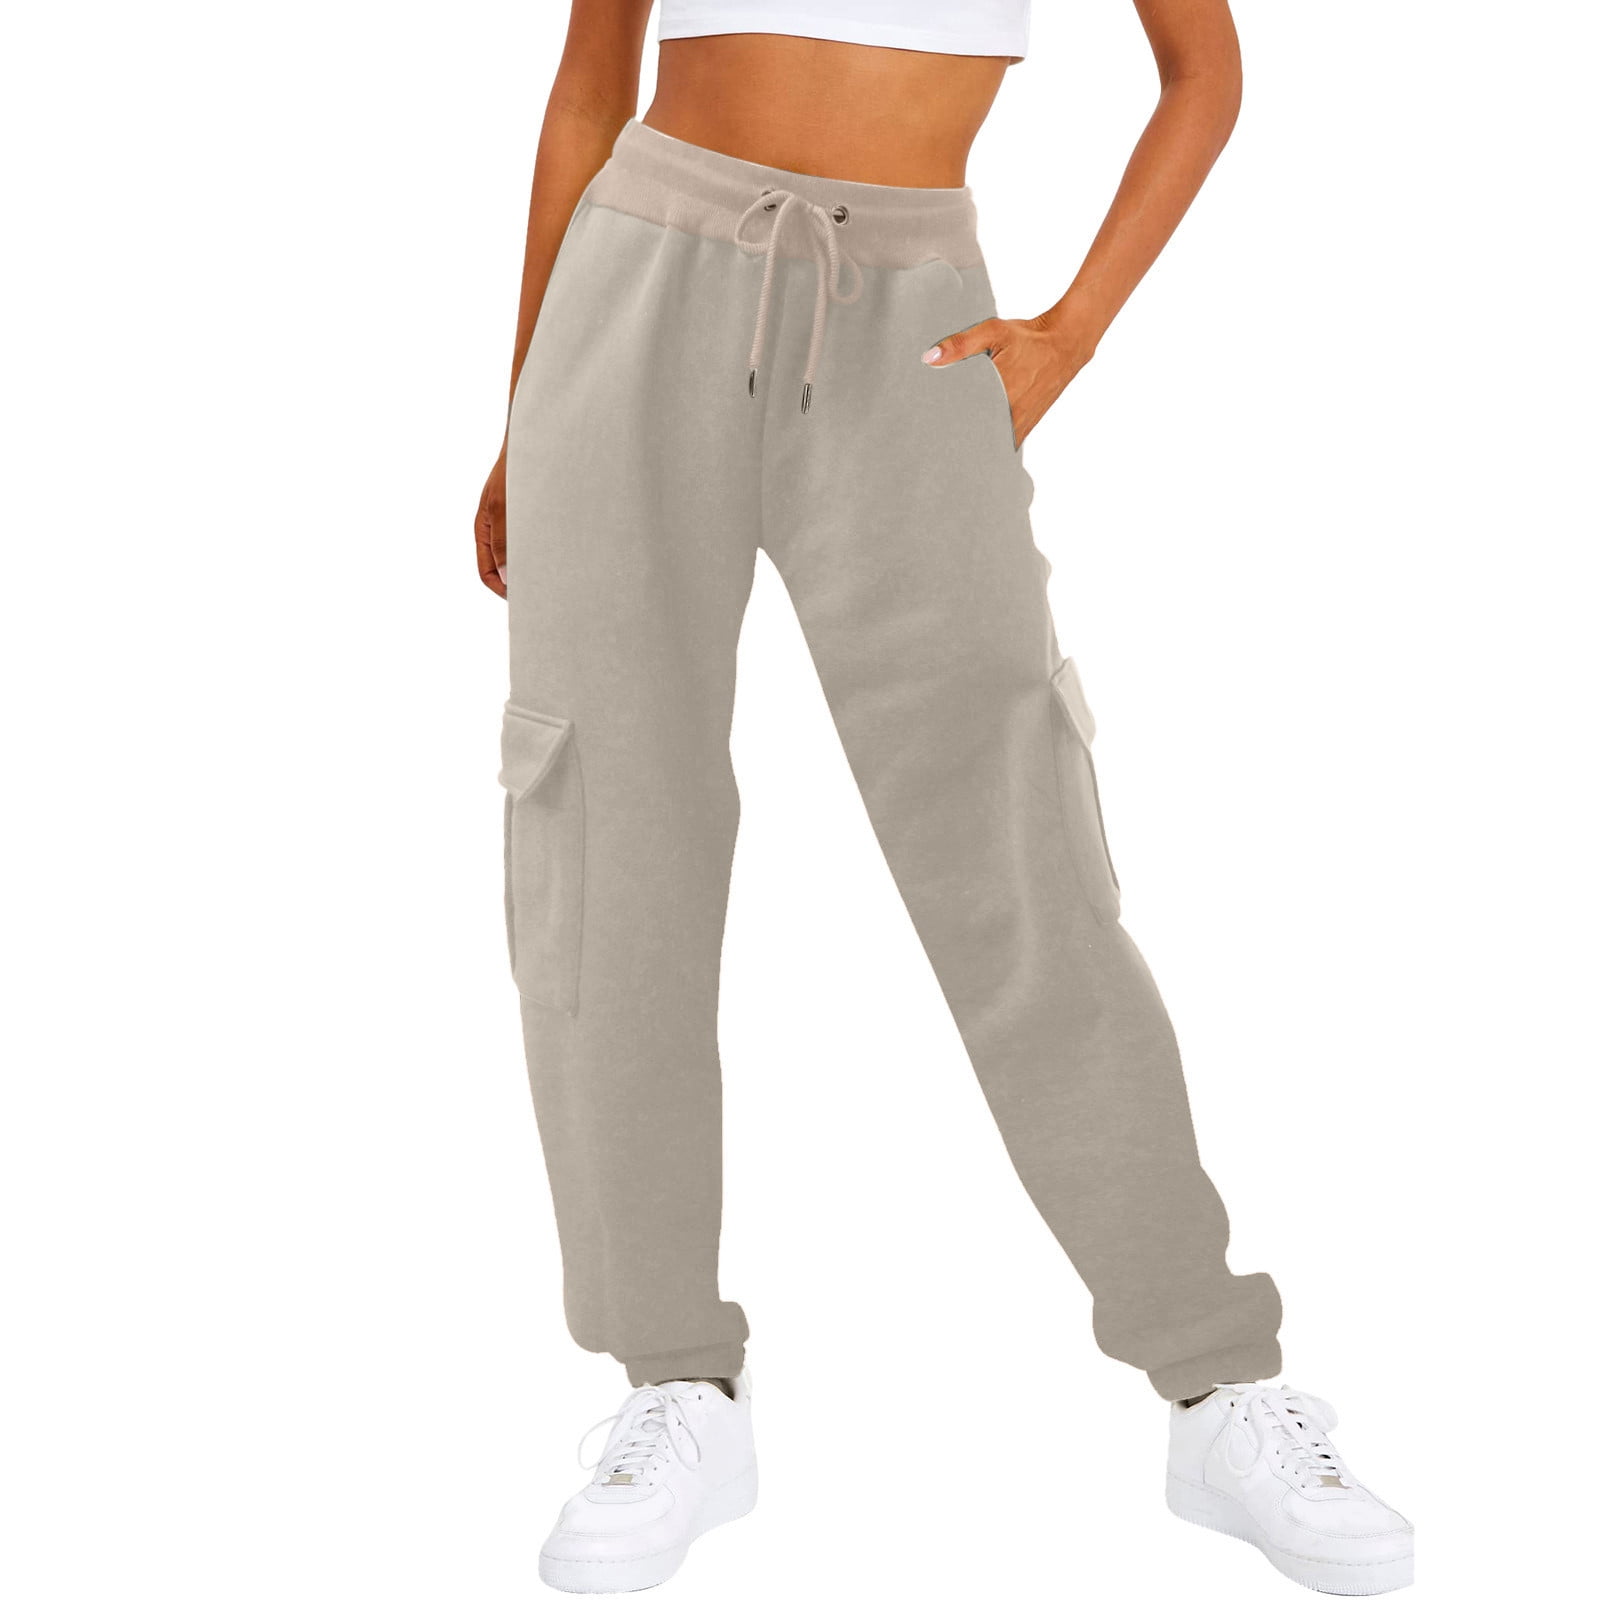 Susanny Oversized Sweatpants for Women Cinch Bottom Drawstring